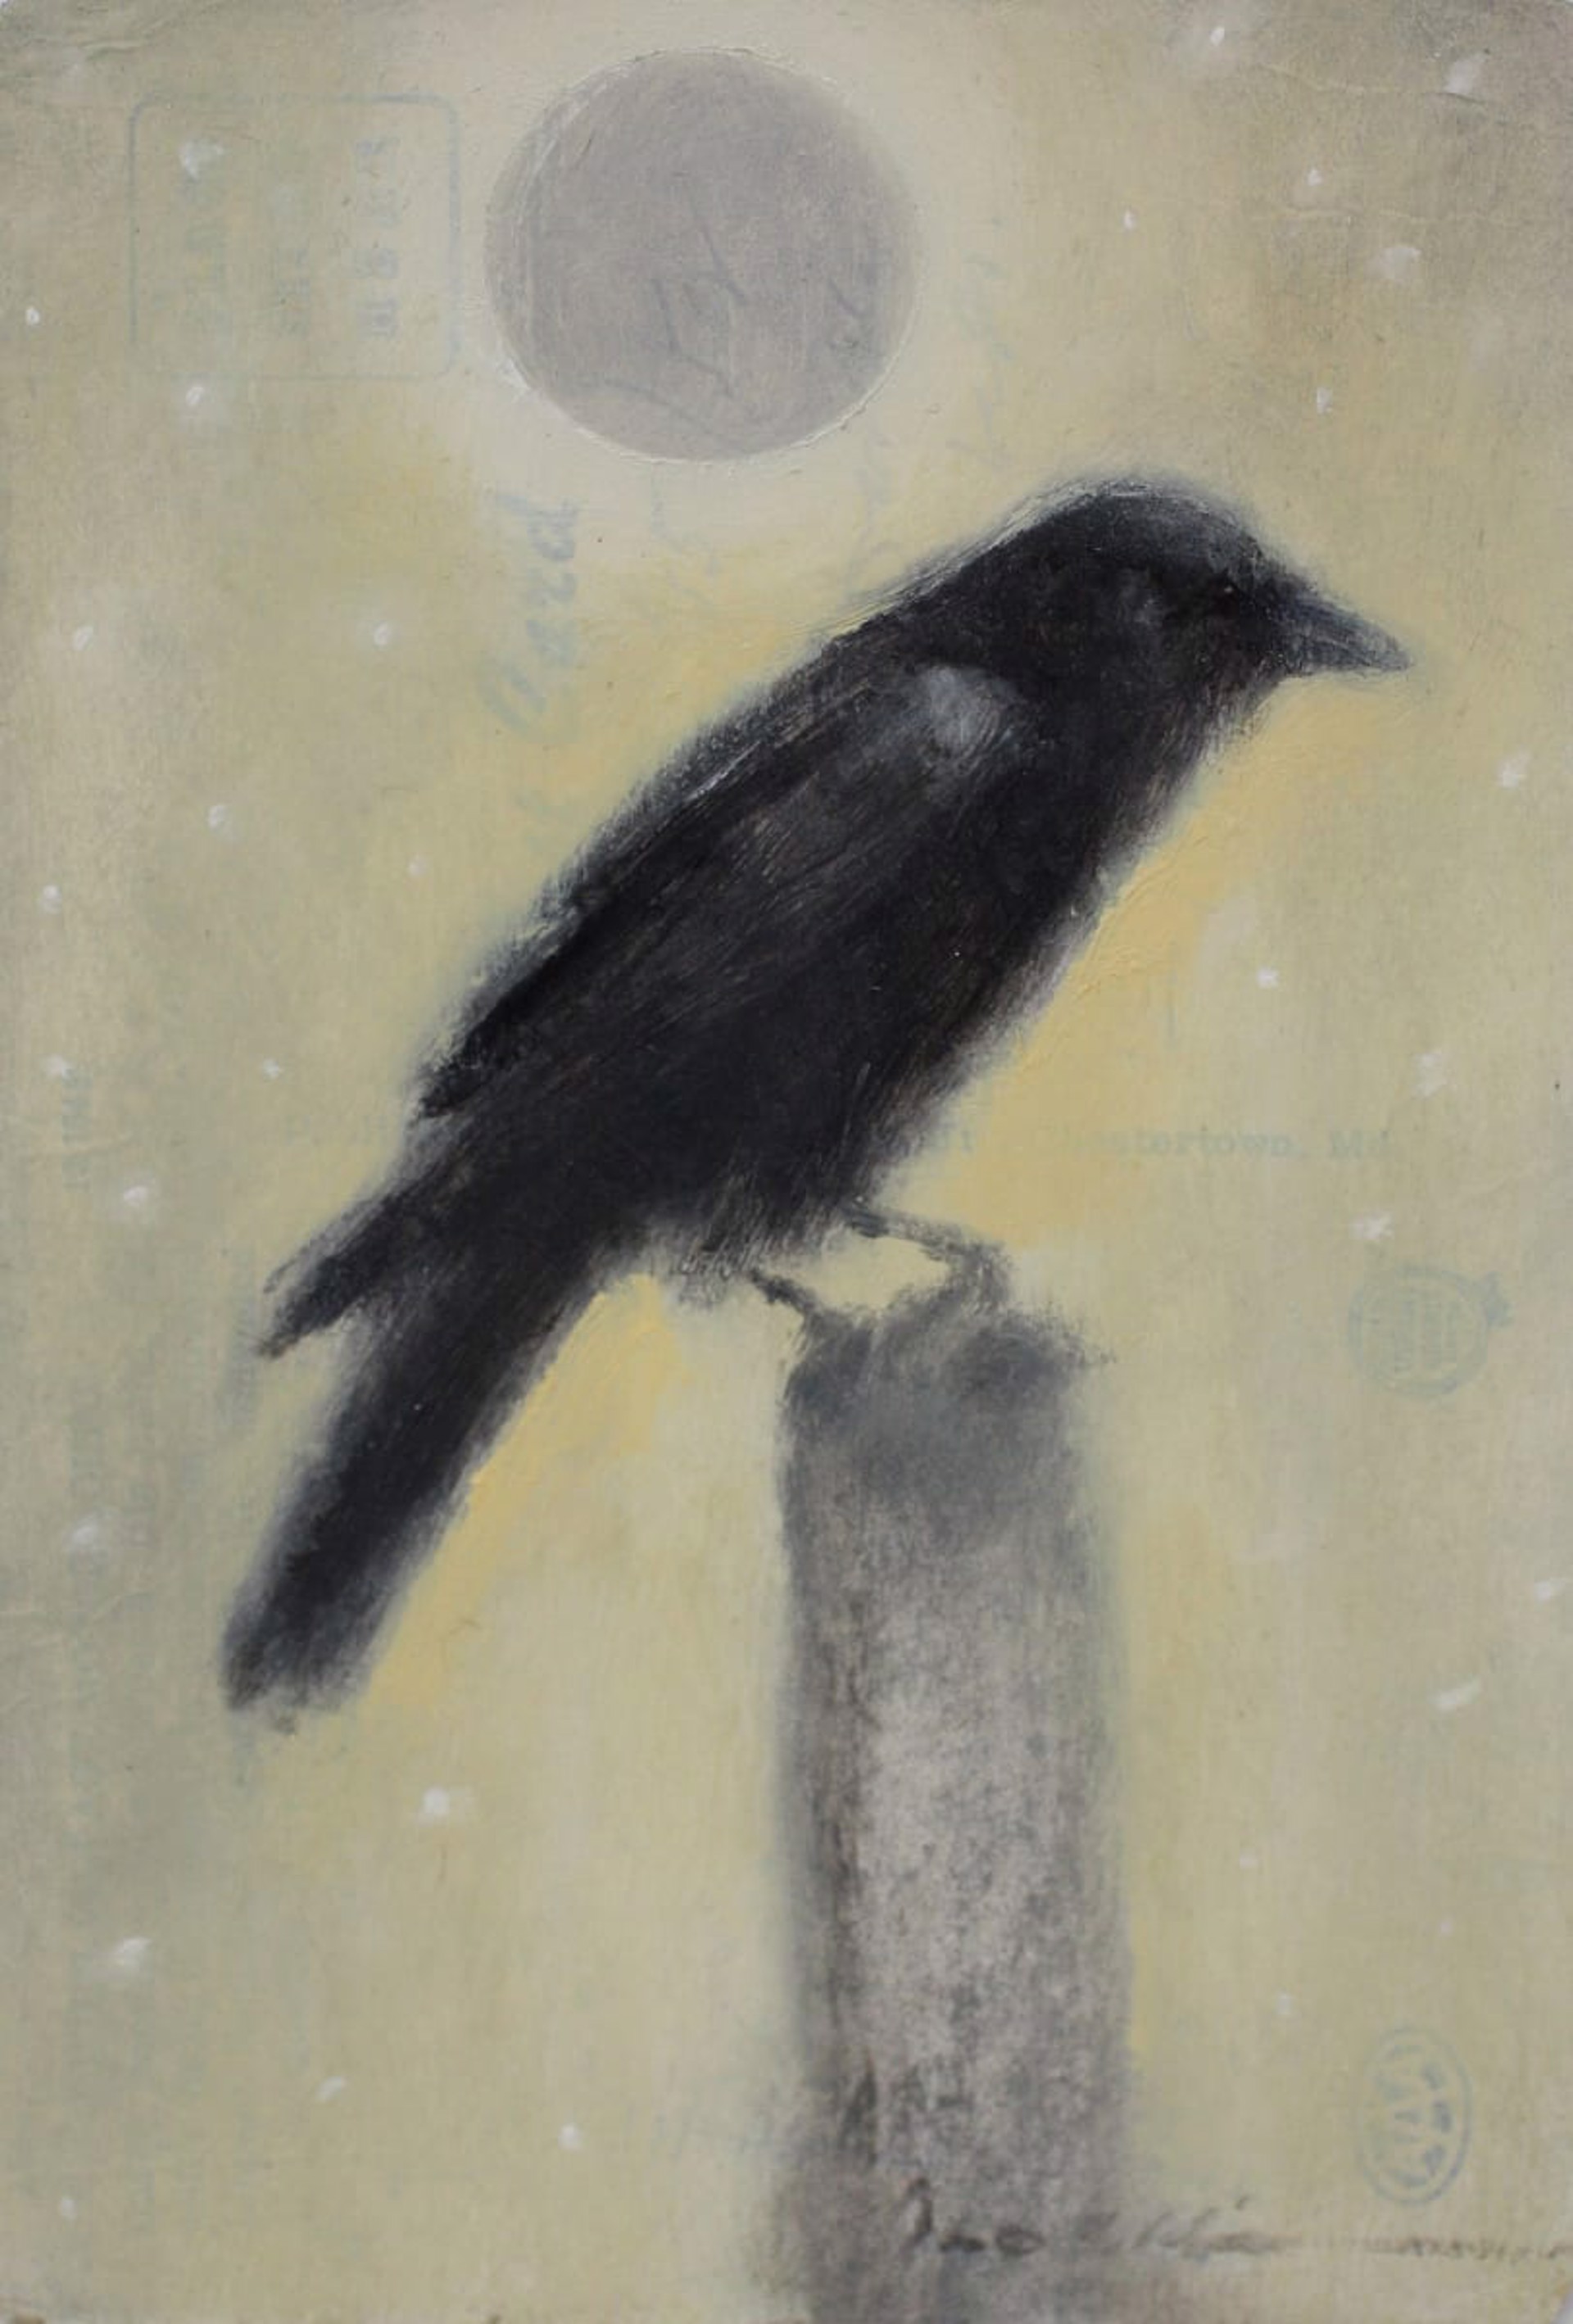 Raven by Scott E. Hill